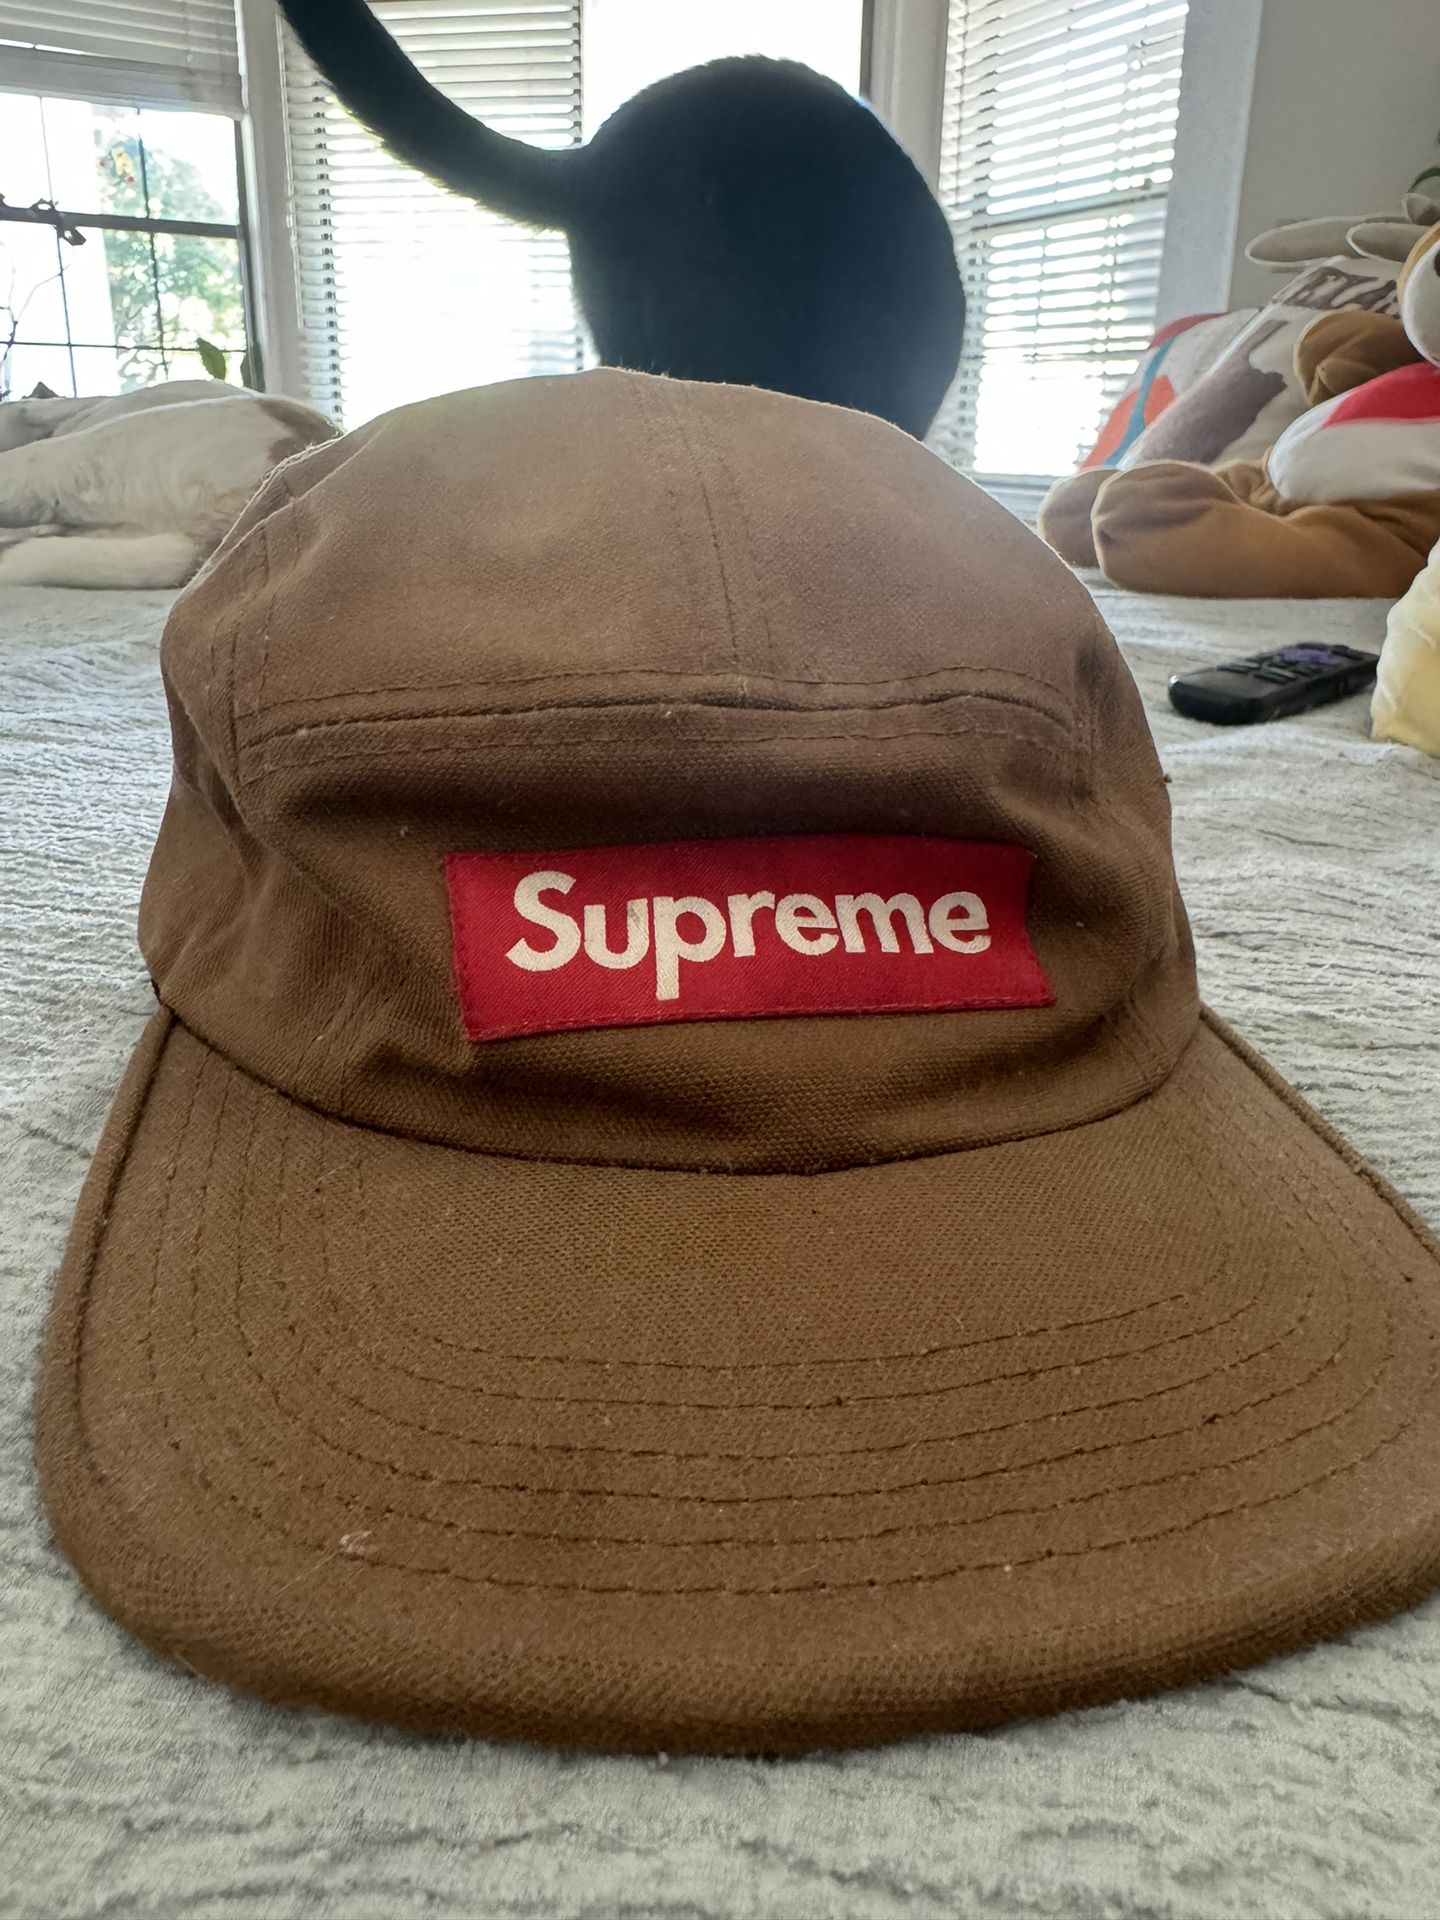 Supreme Brown Hat 